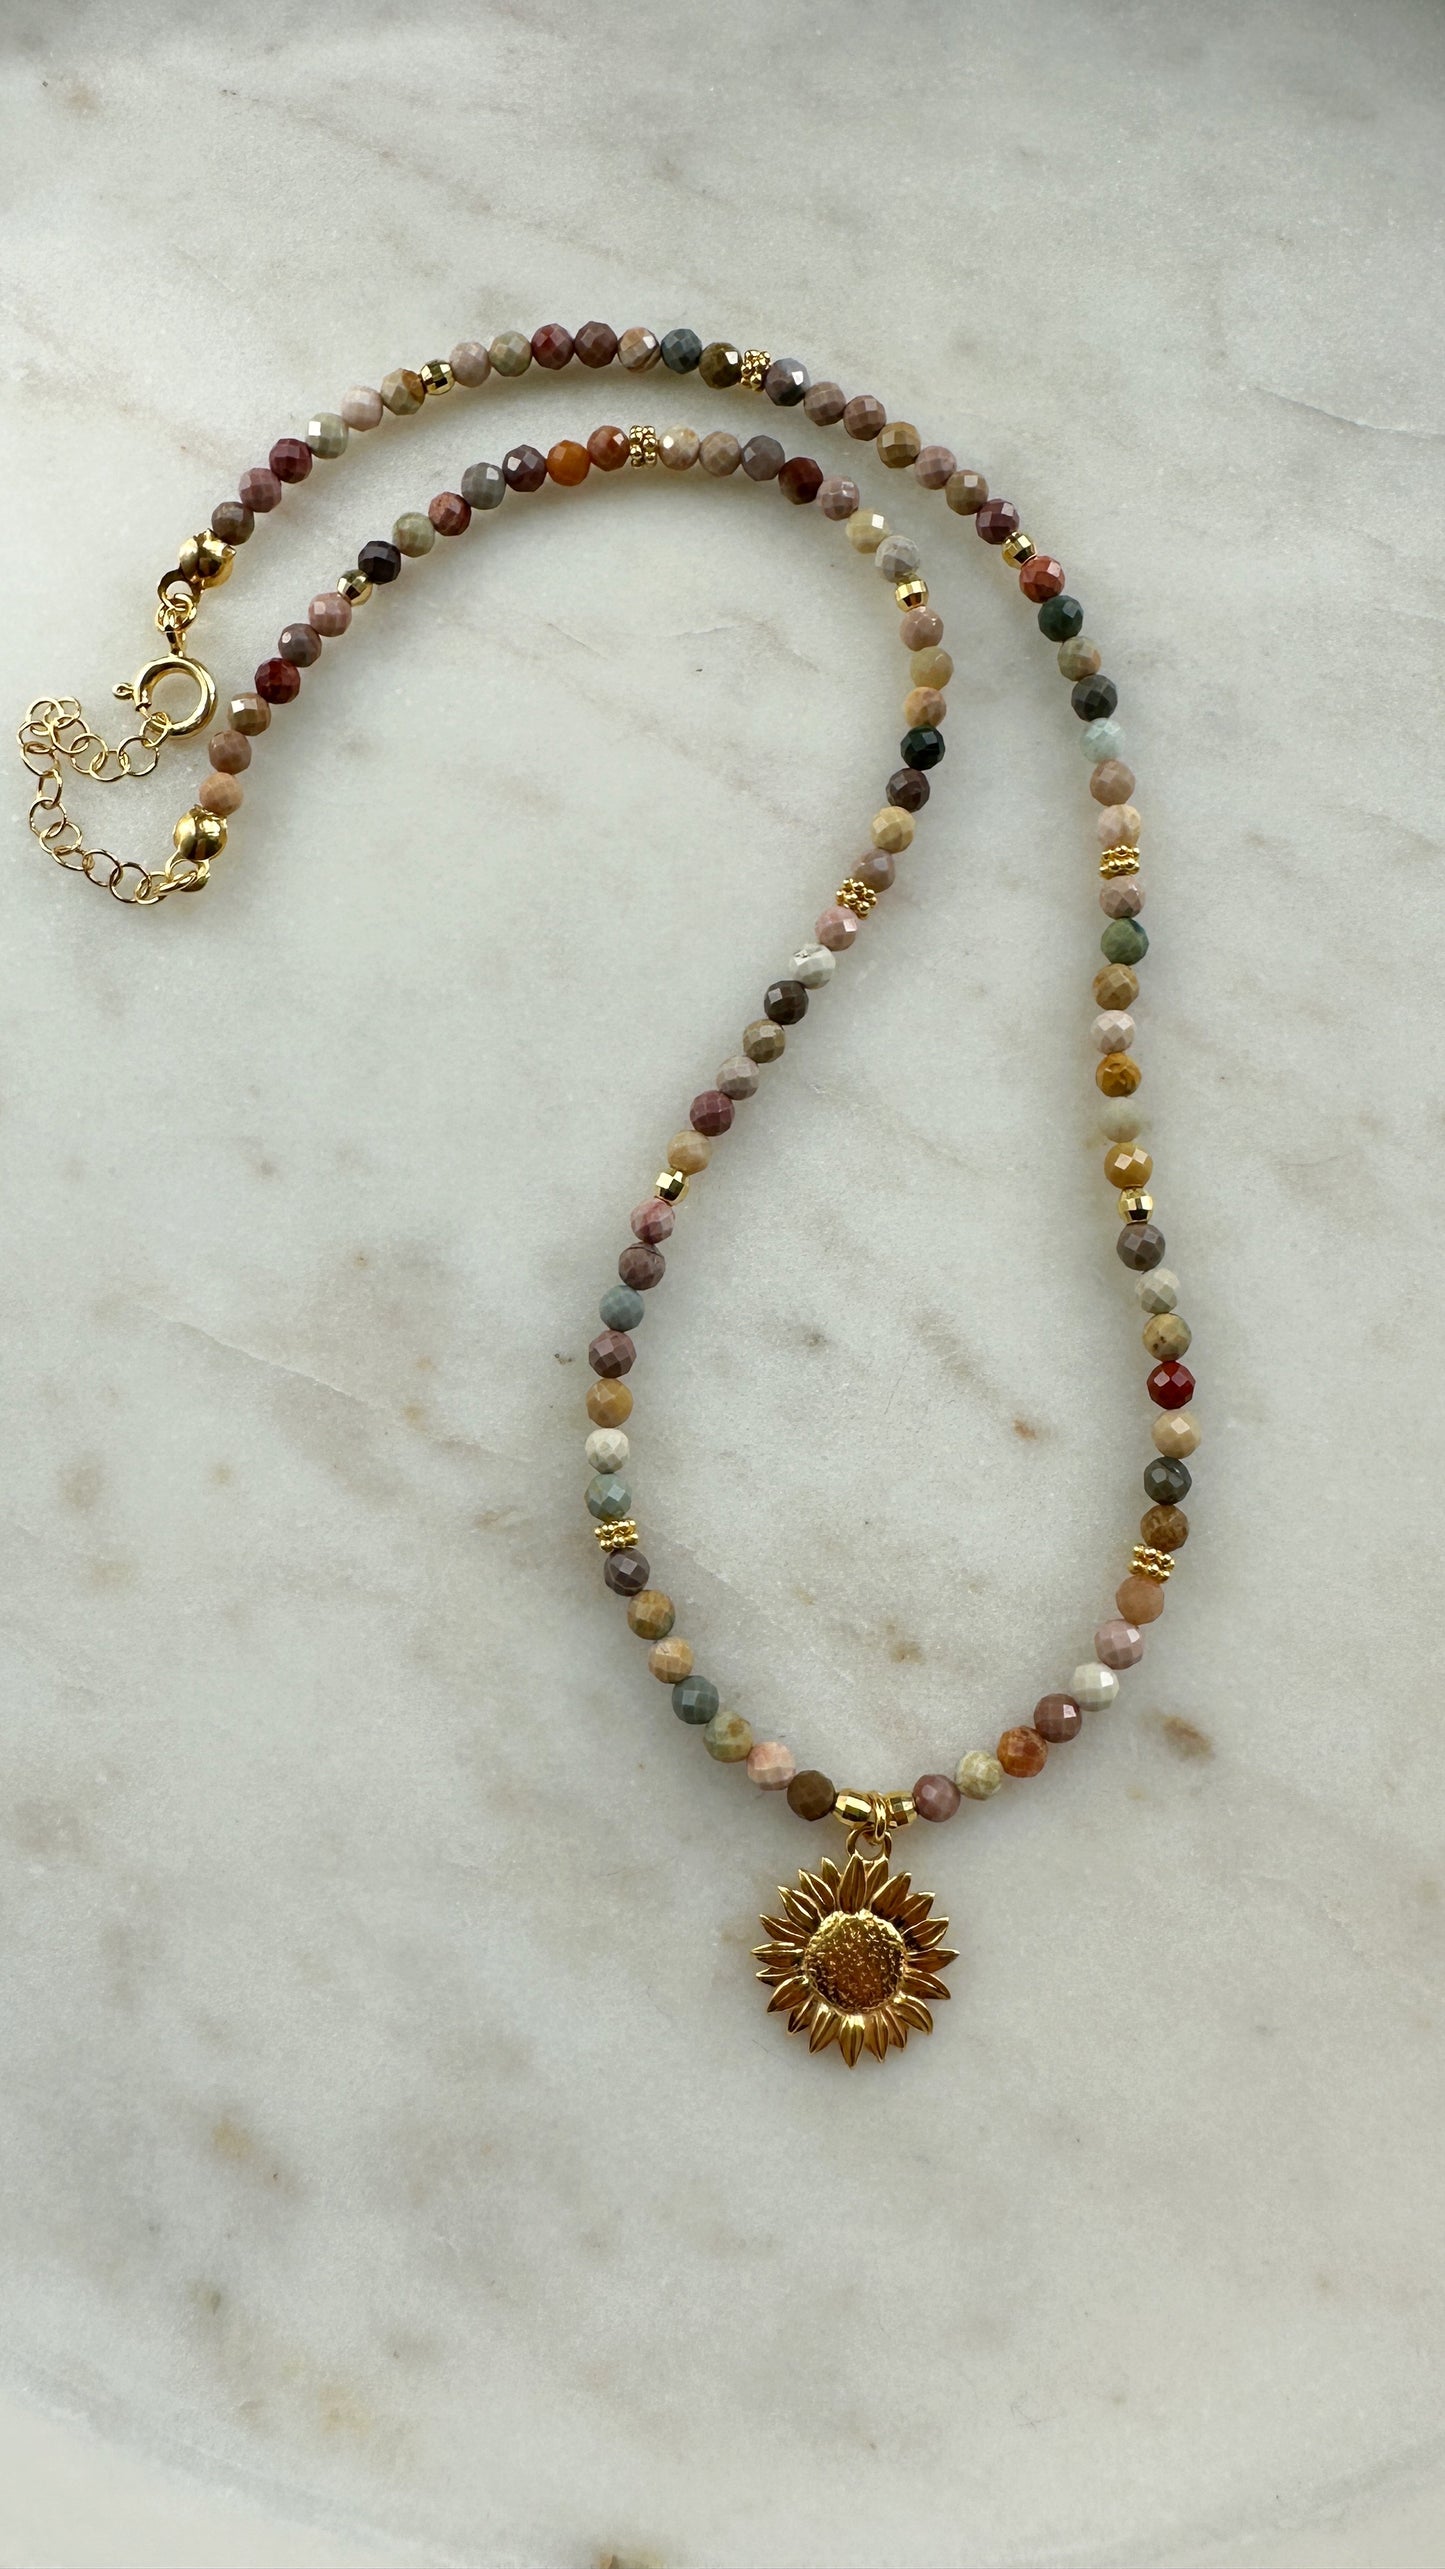 Sunflower Field necklace